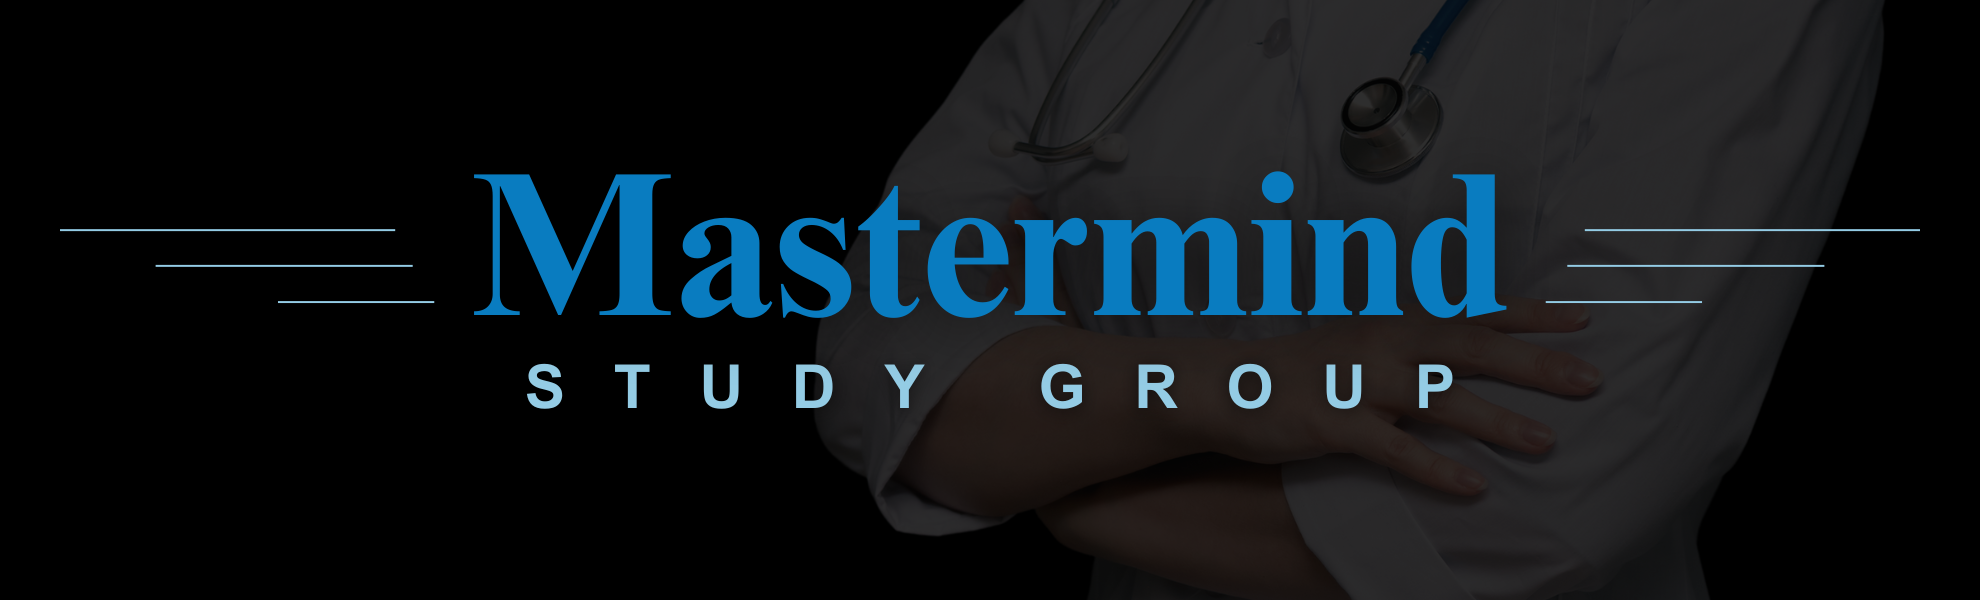 Mastermind Study Group Banner